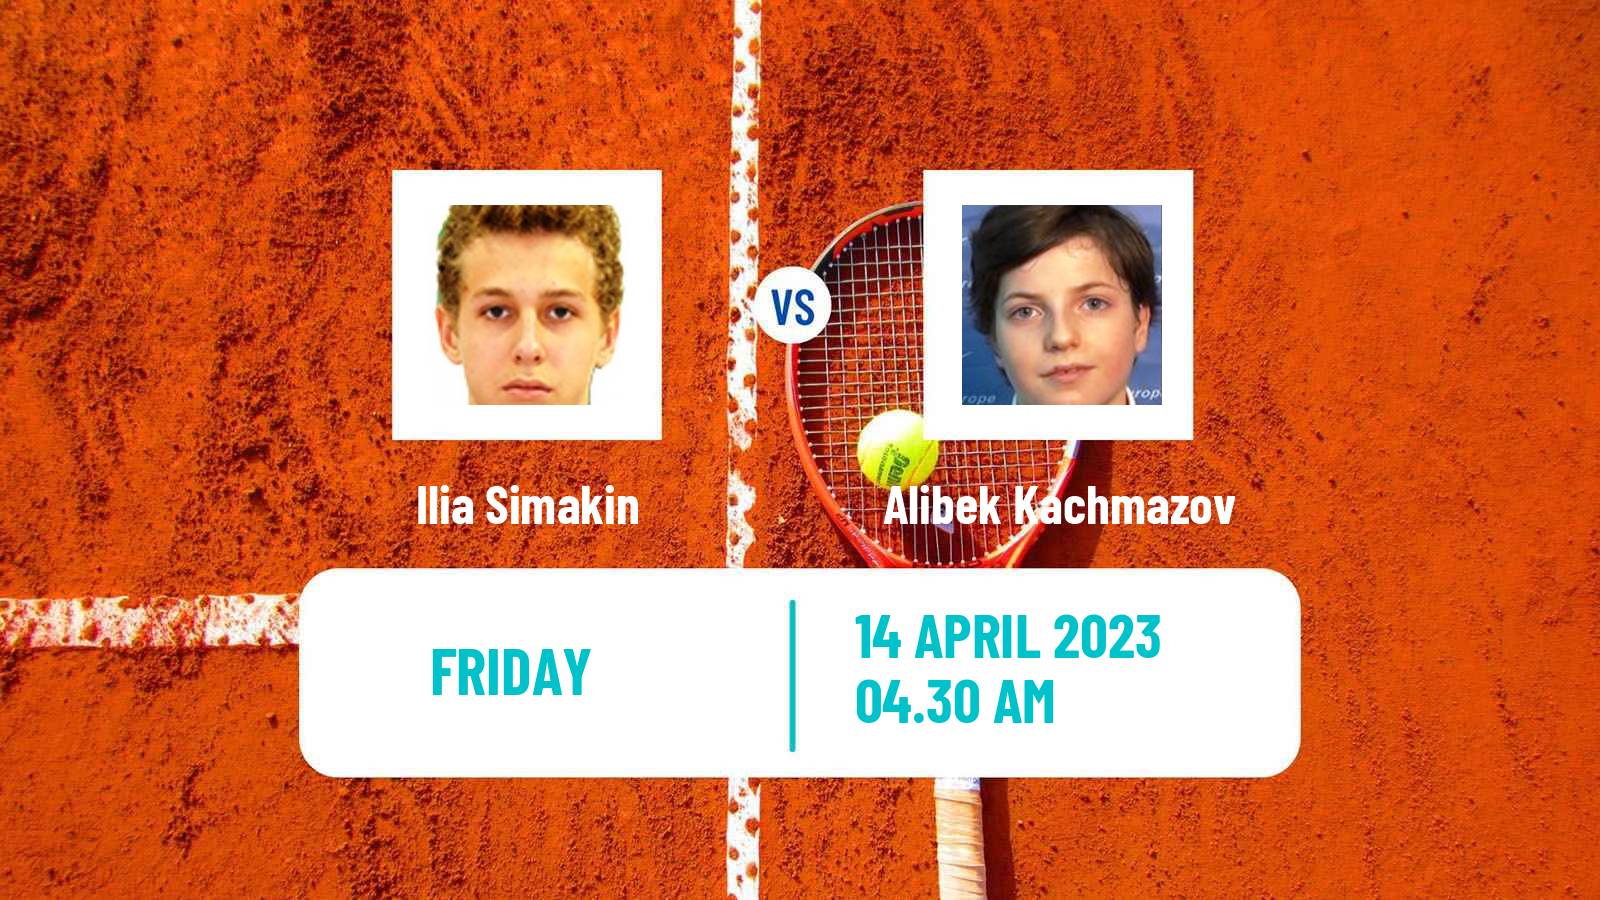 Tennis ITF Tournaments Ilia Simakin - Alibek Kachmazov